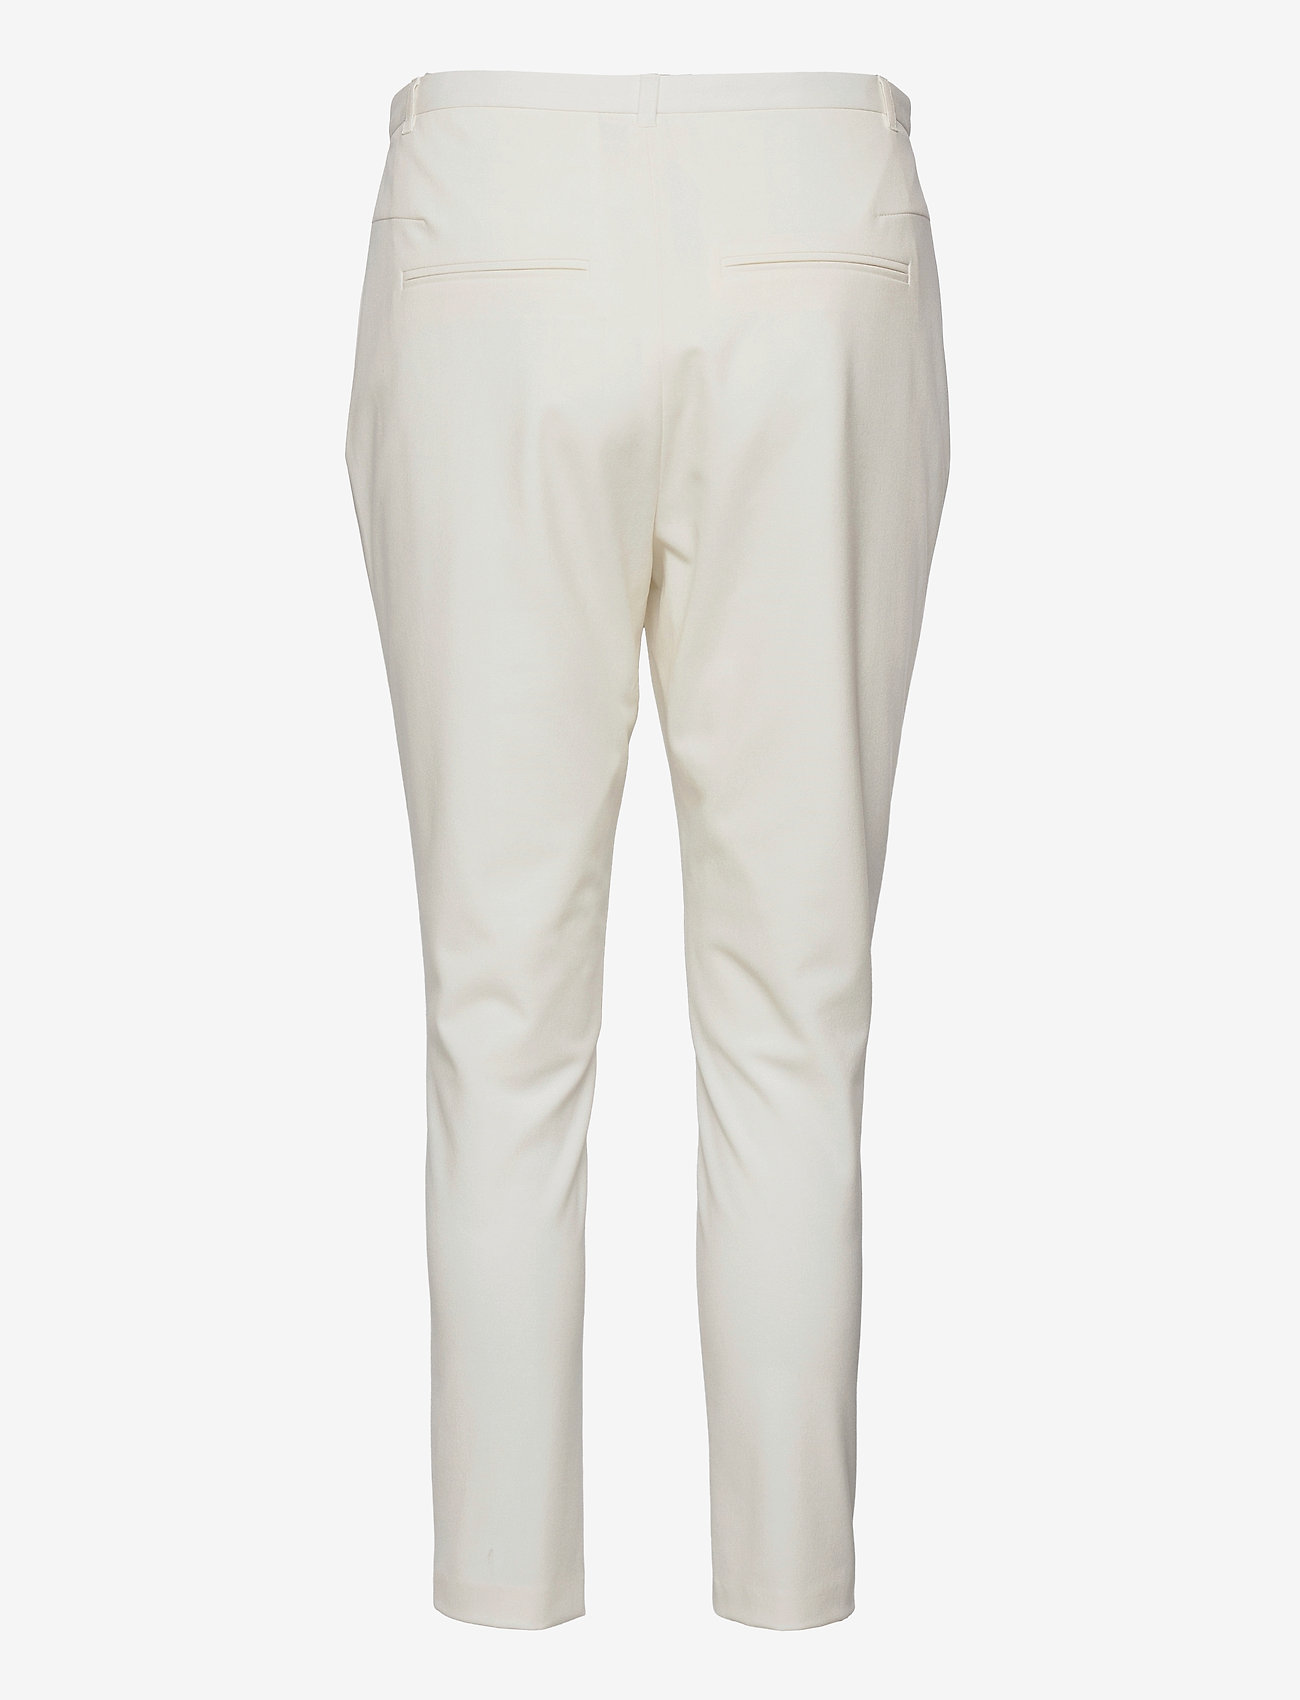 Karen By Simonsen - SydneyKB Fashion Pants - slim fit hosen - snow white - 1